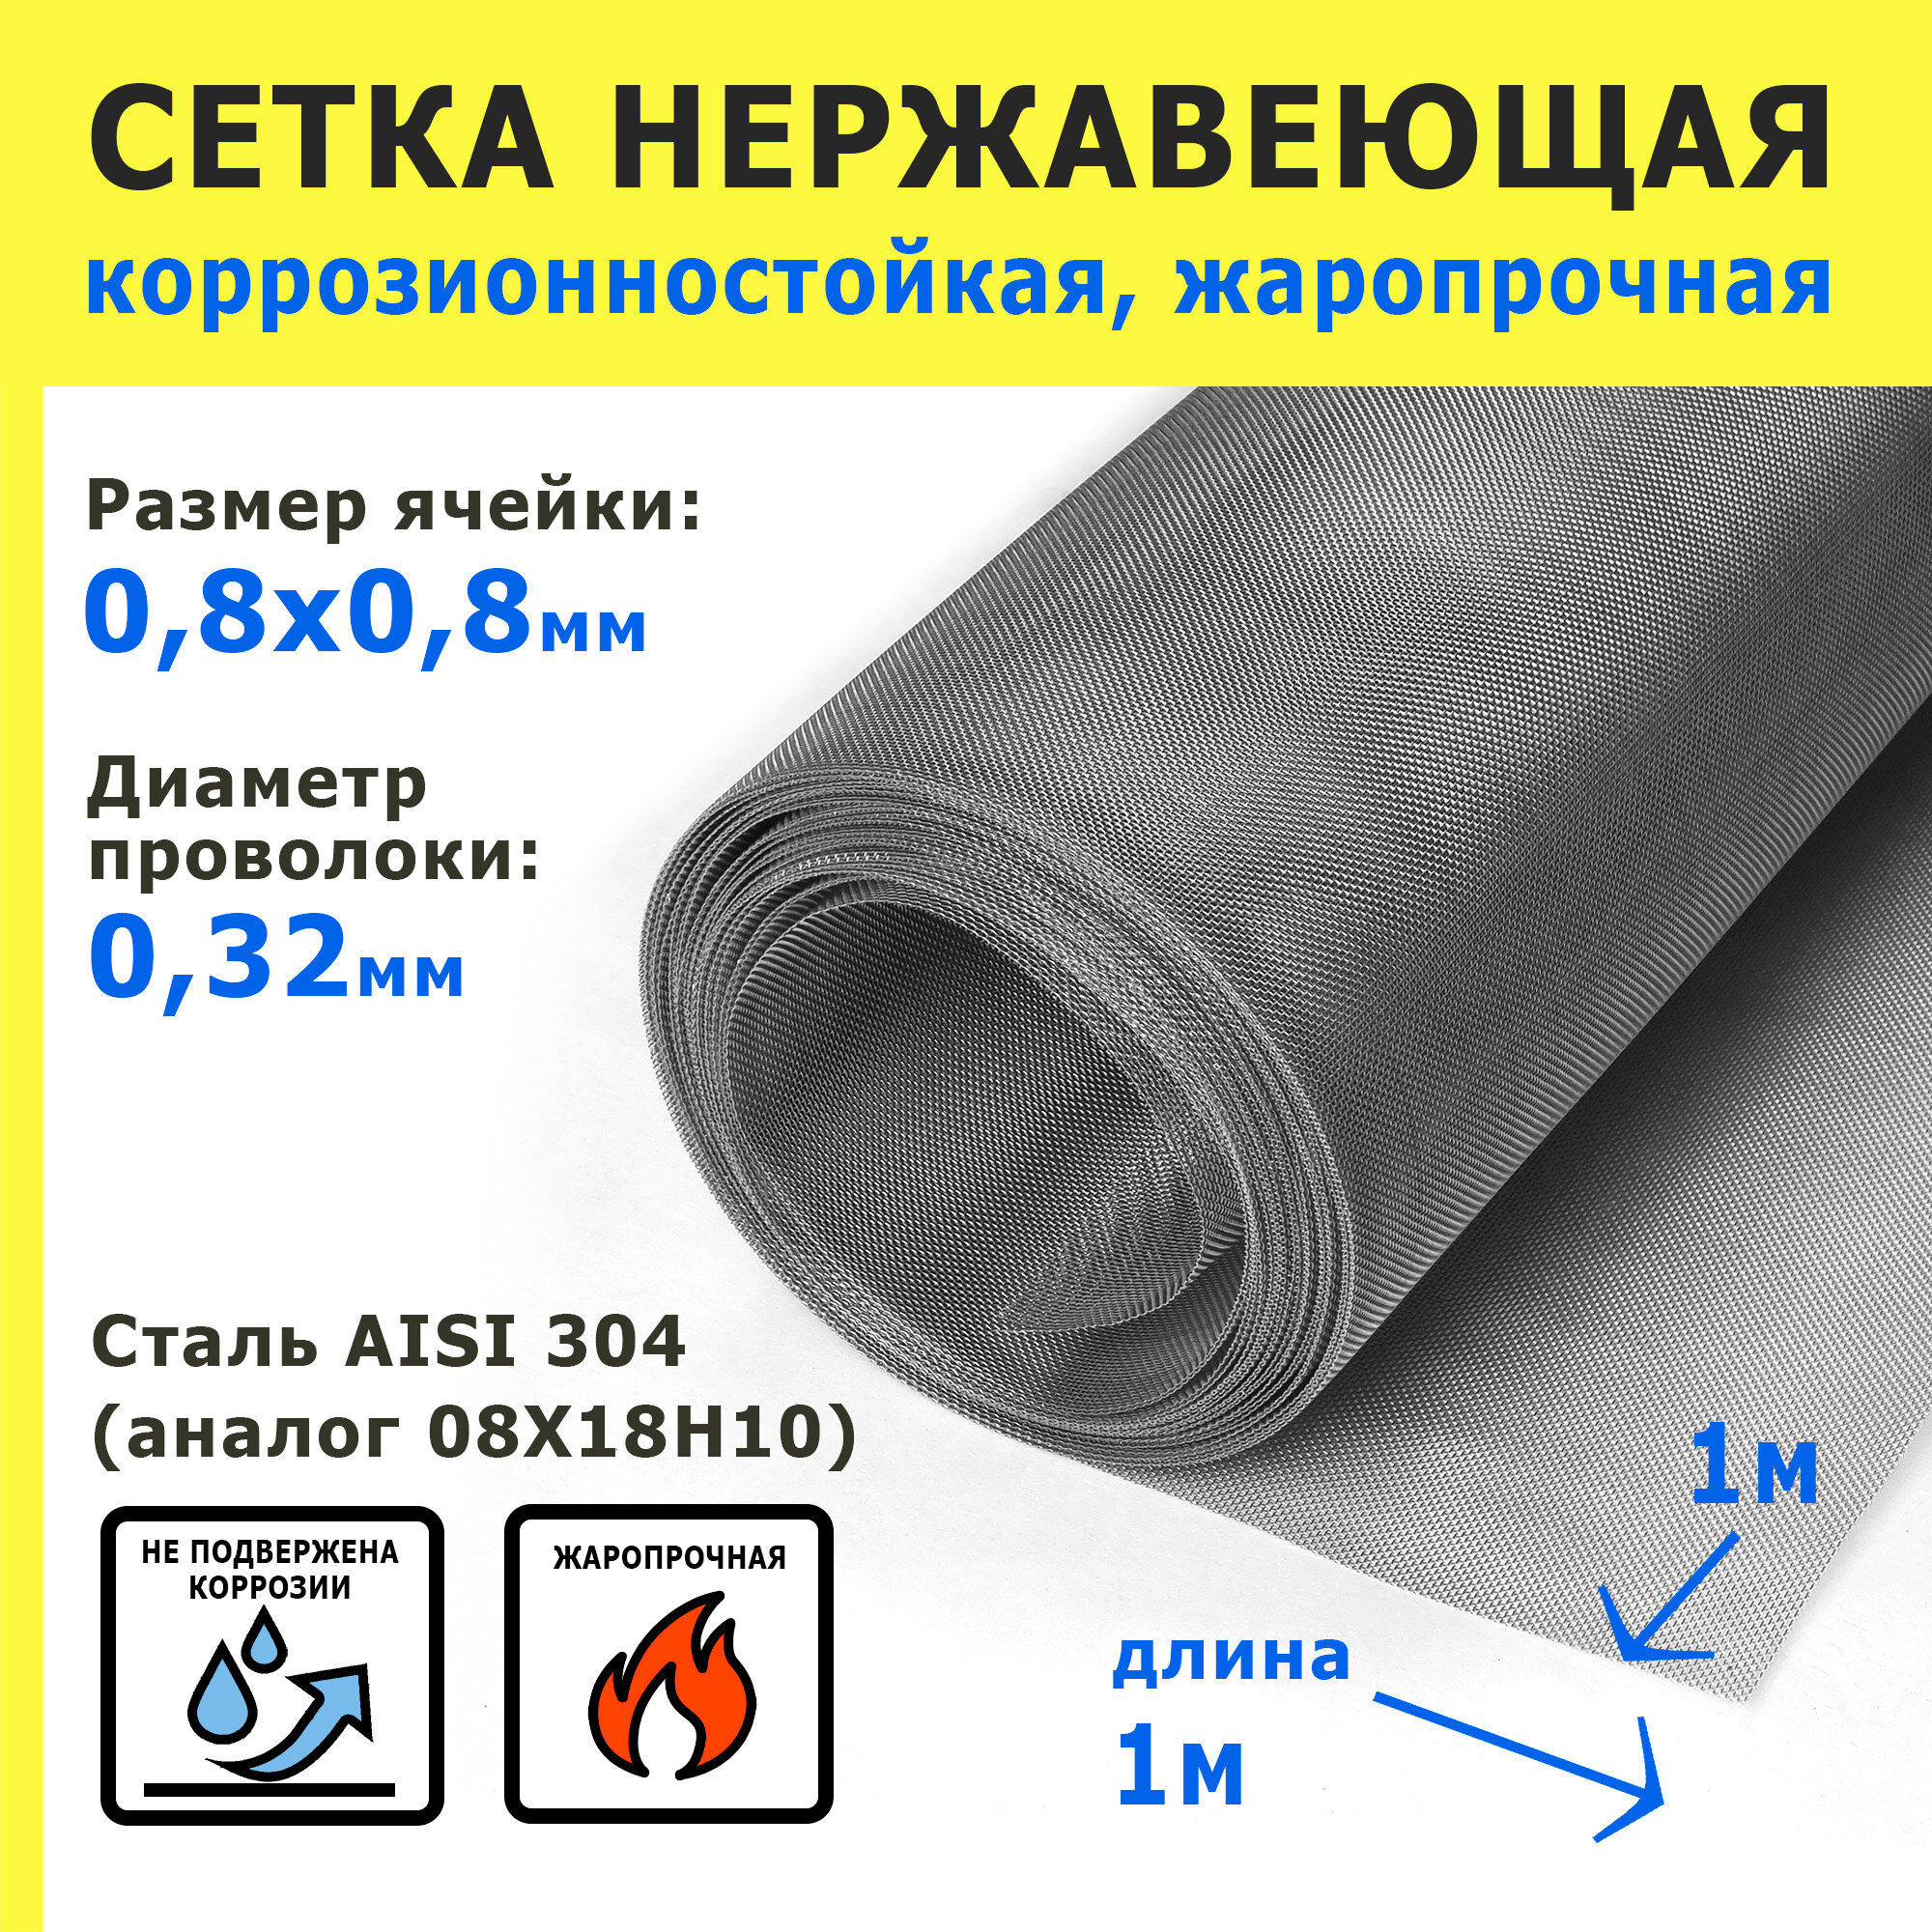 Сетка нержавеющая 0,8х0,8х0,32 мм для фильтрации, очистки, просеивания. Cталь AISI 304 (08Х18Н10). Размер 1х1 метр.